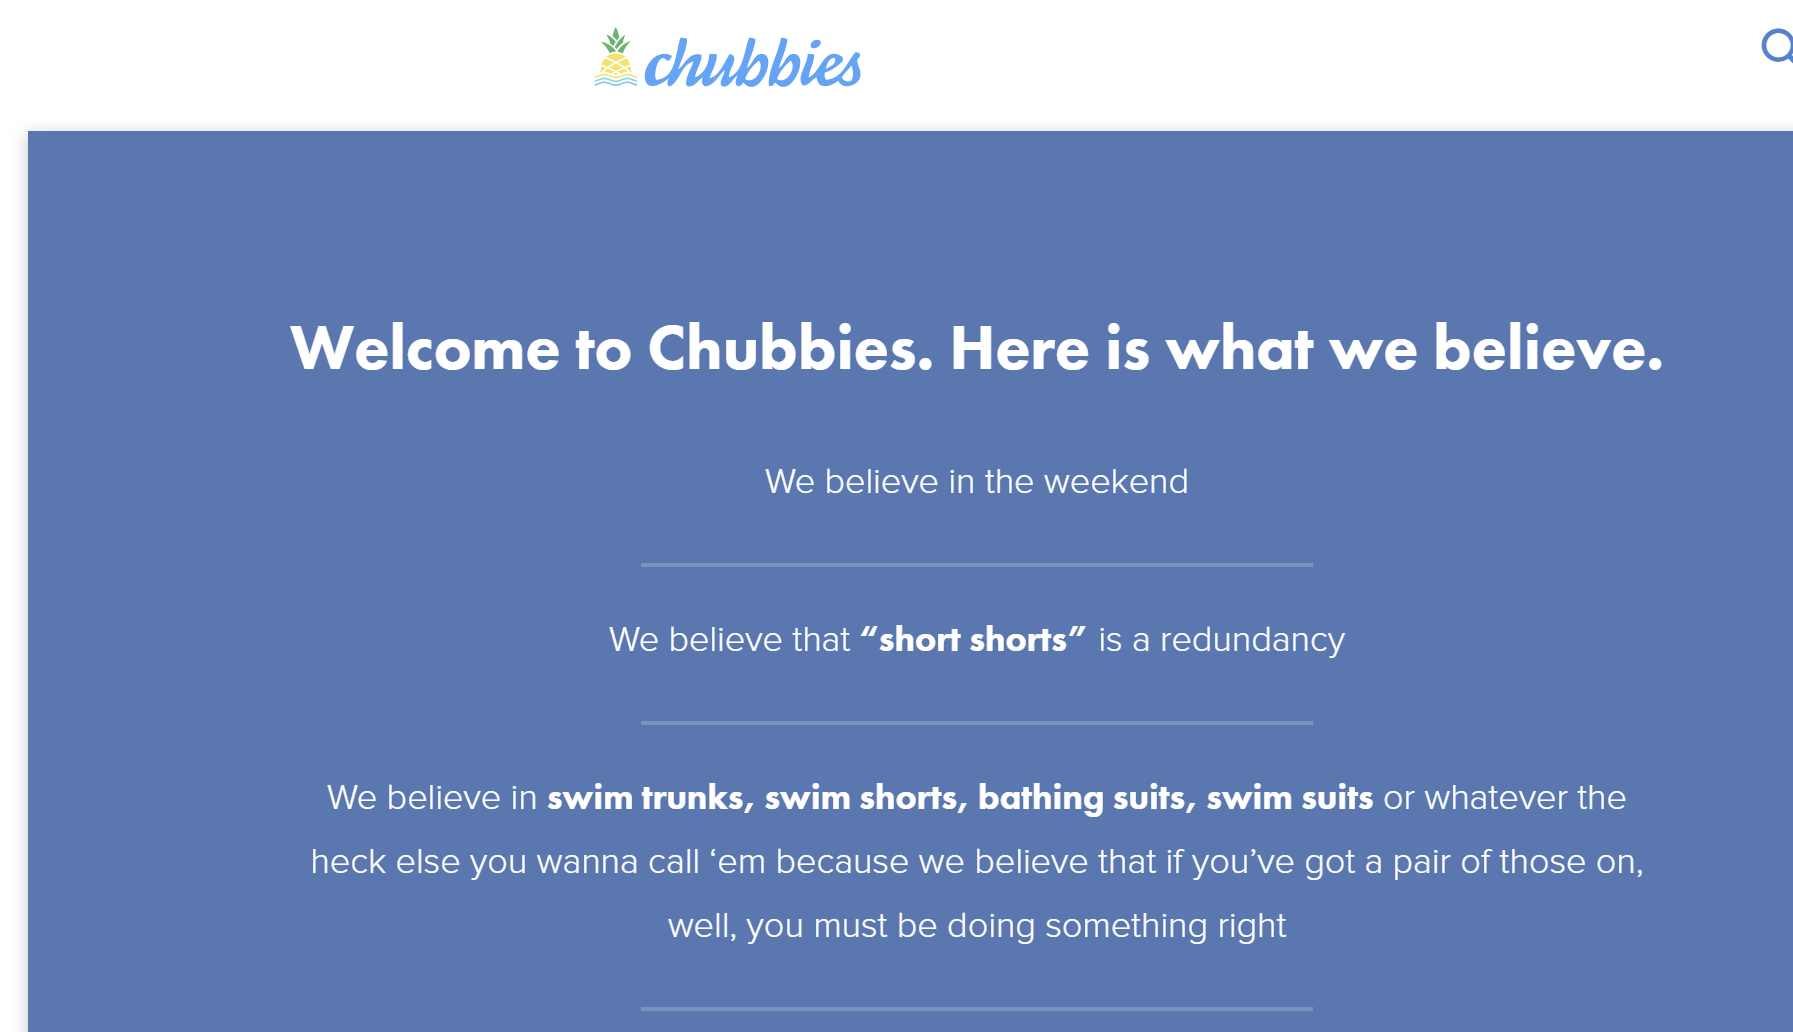 chubbies brand ethos beliefs website